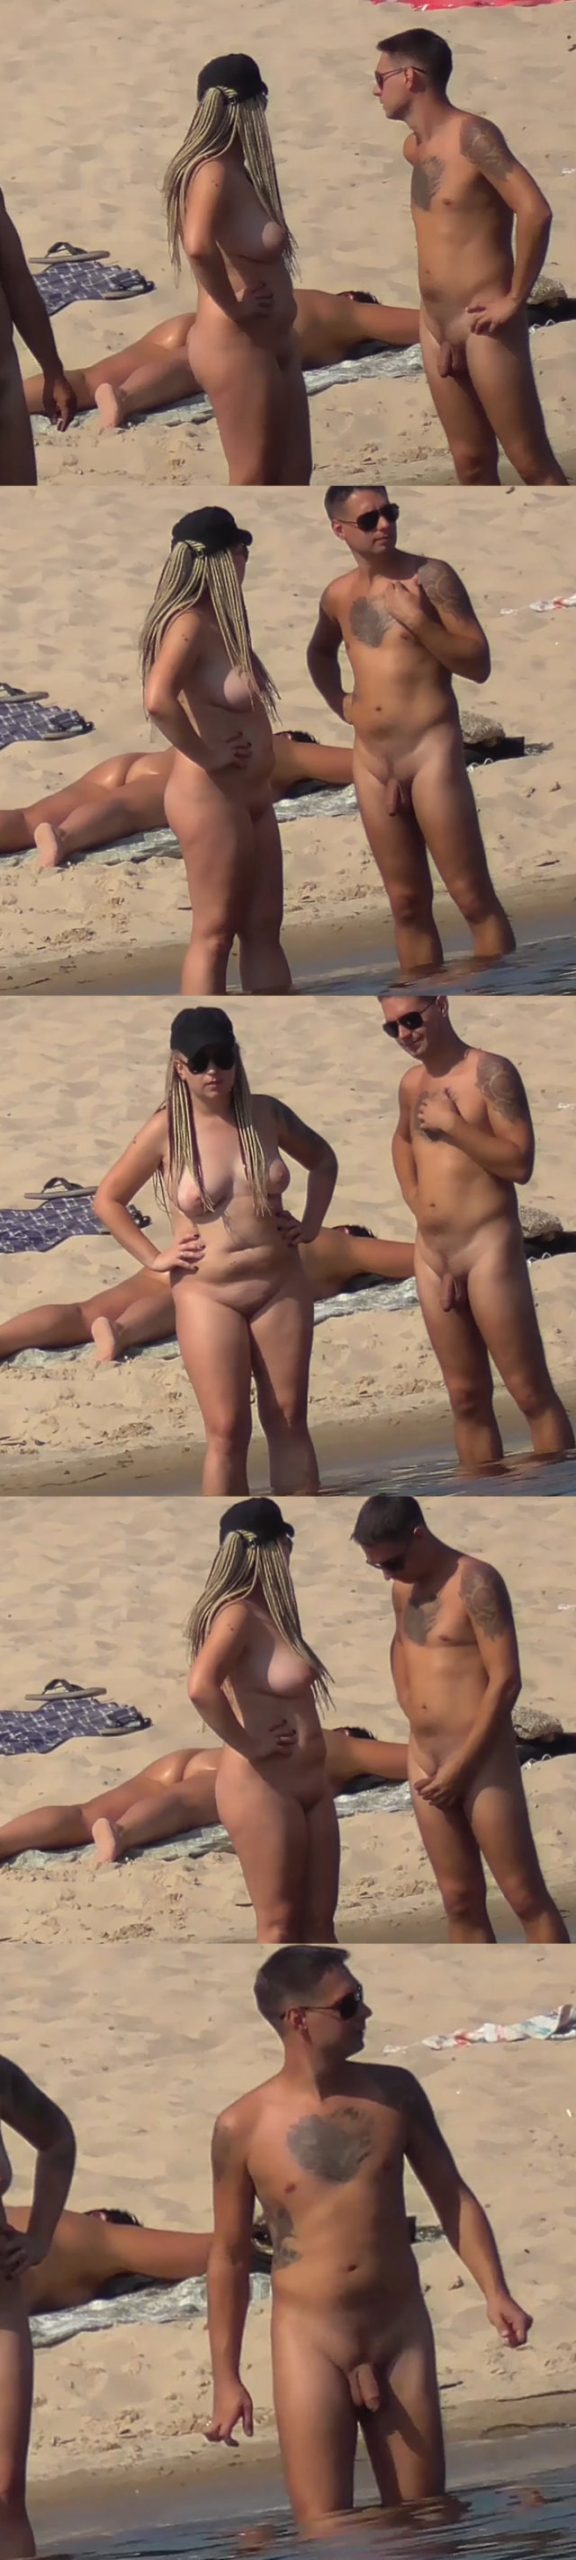 straight nudist guy enjoying the beach naked